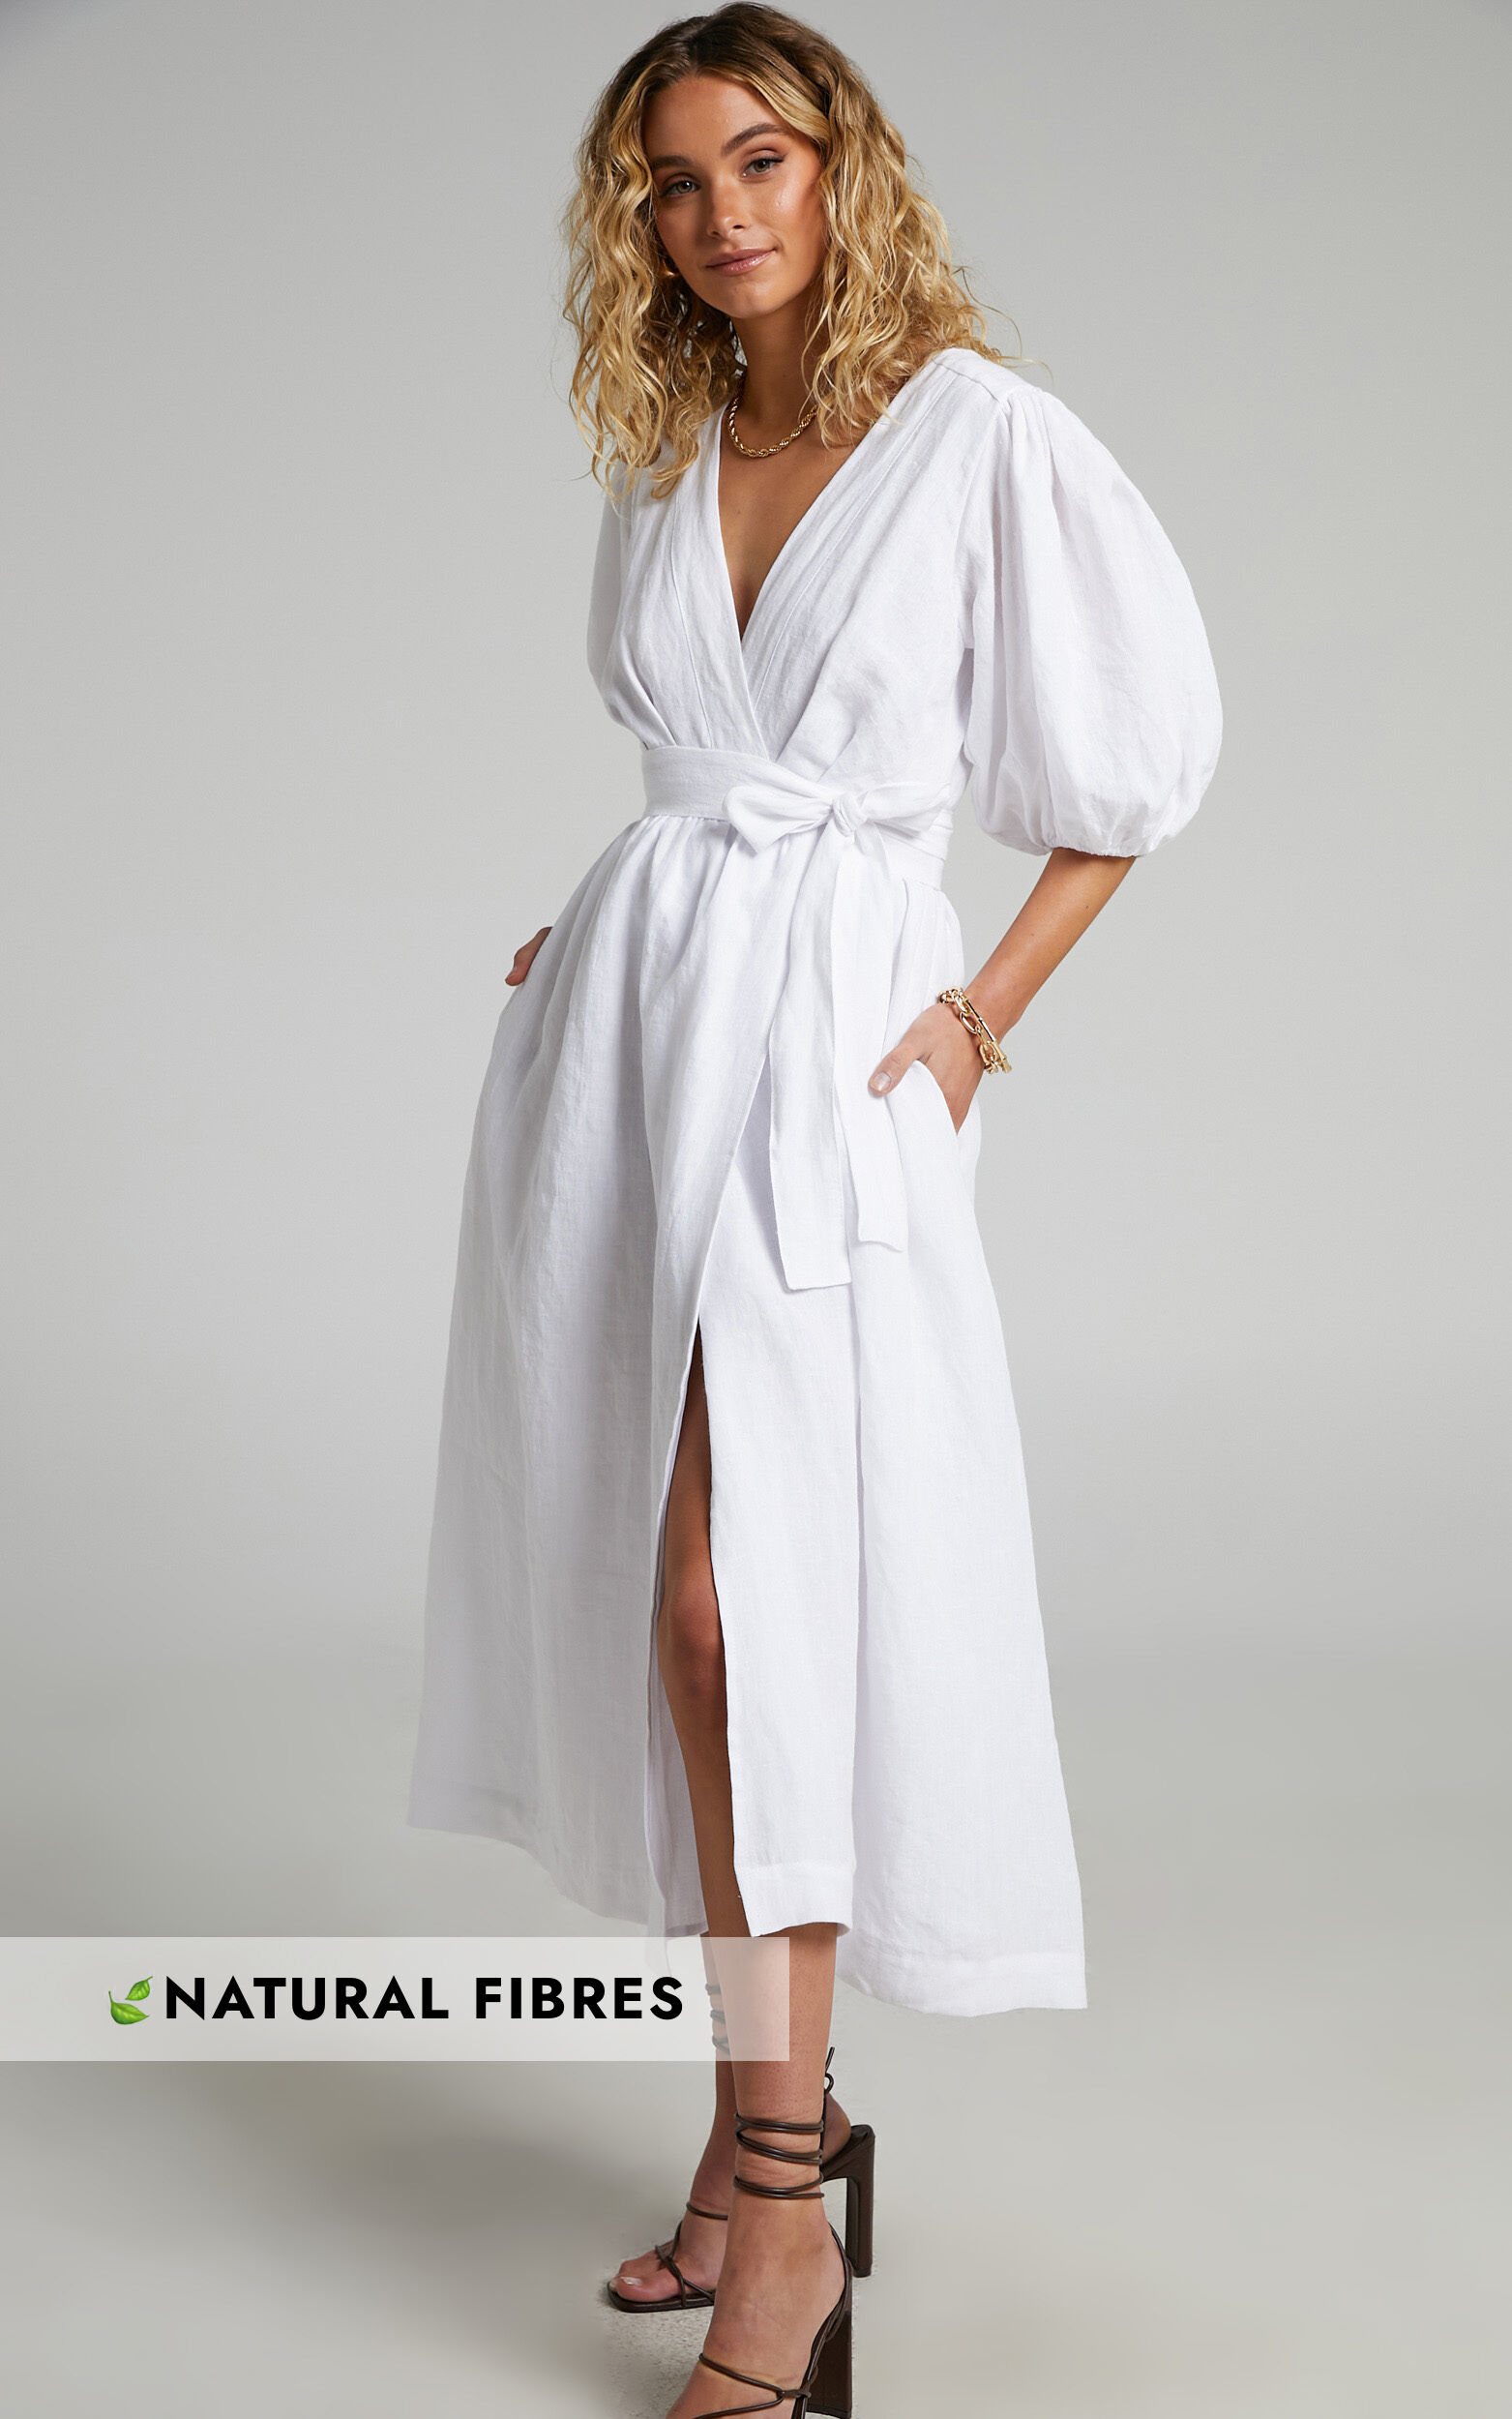 White Linen Midi Dress  ButtonUp Dress  Dress With Pockets  Lulus